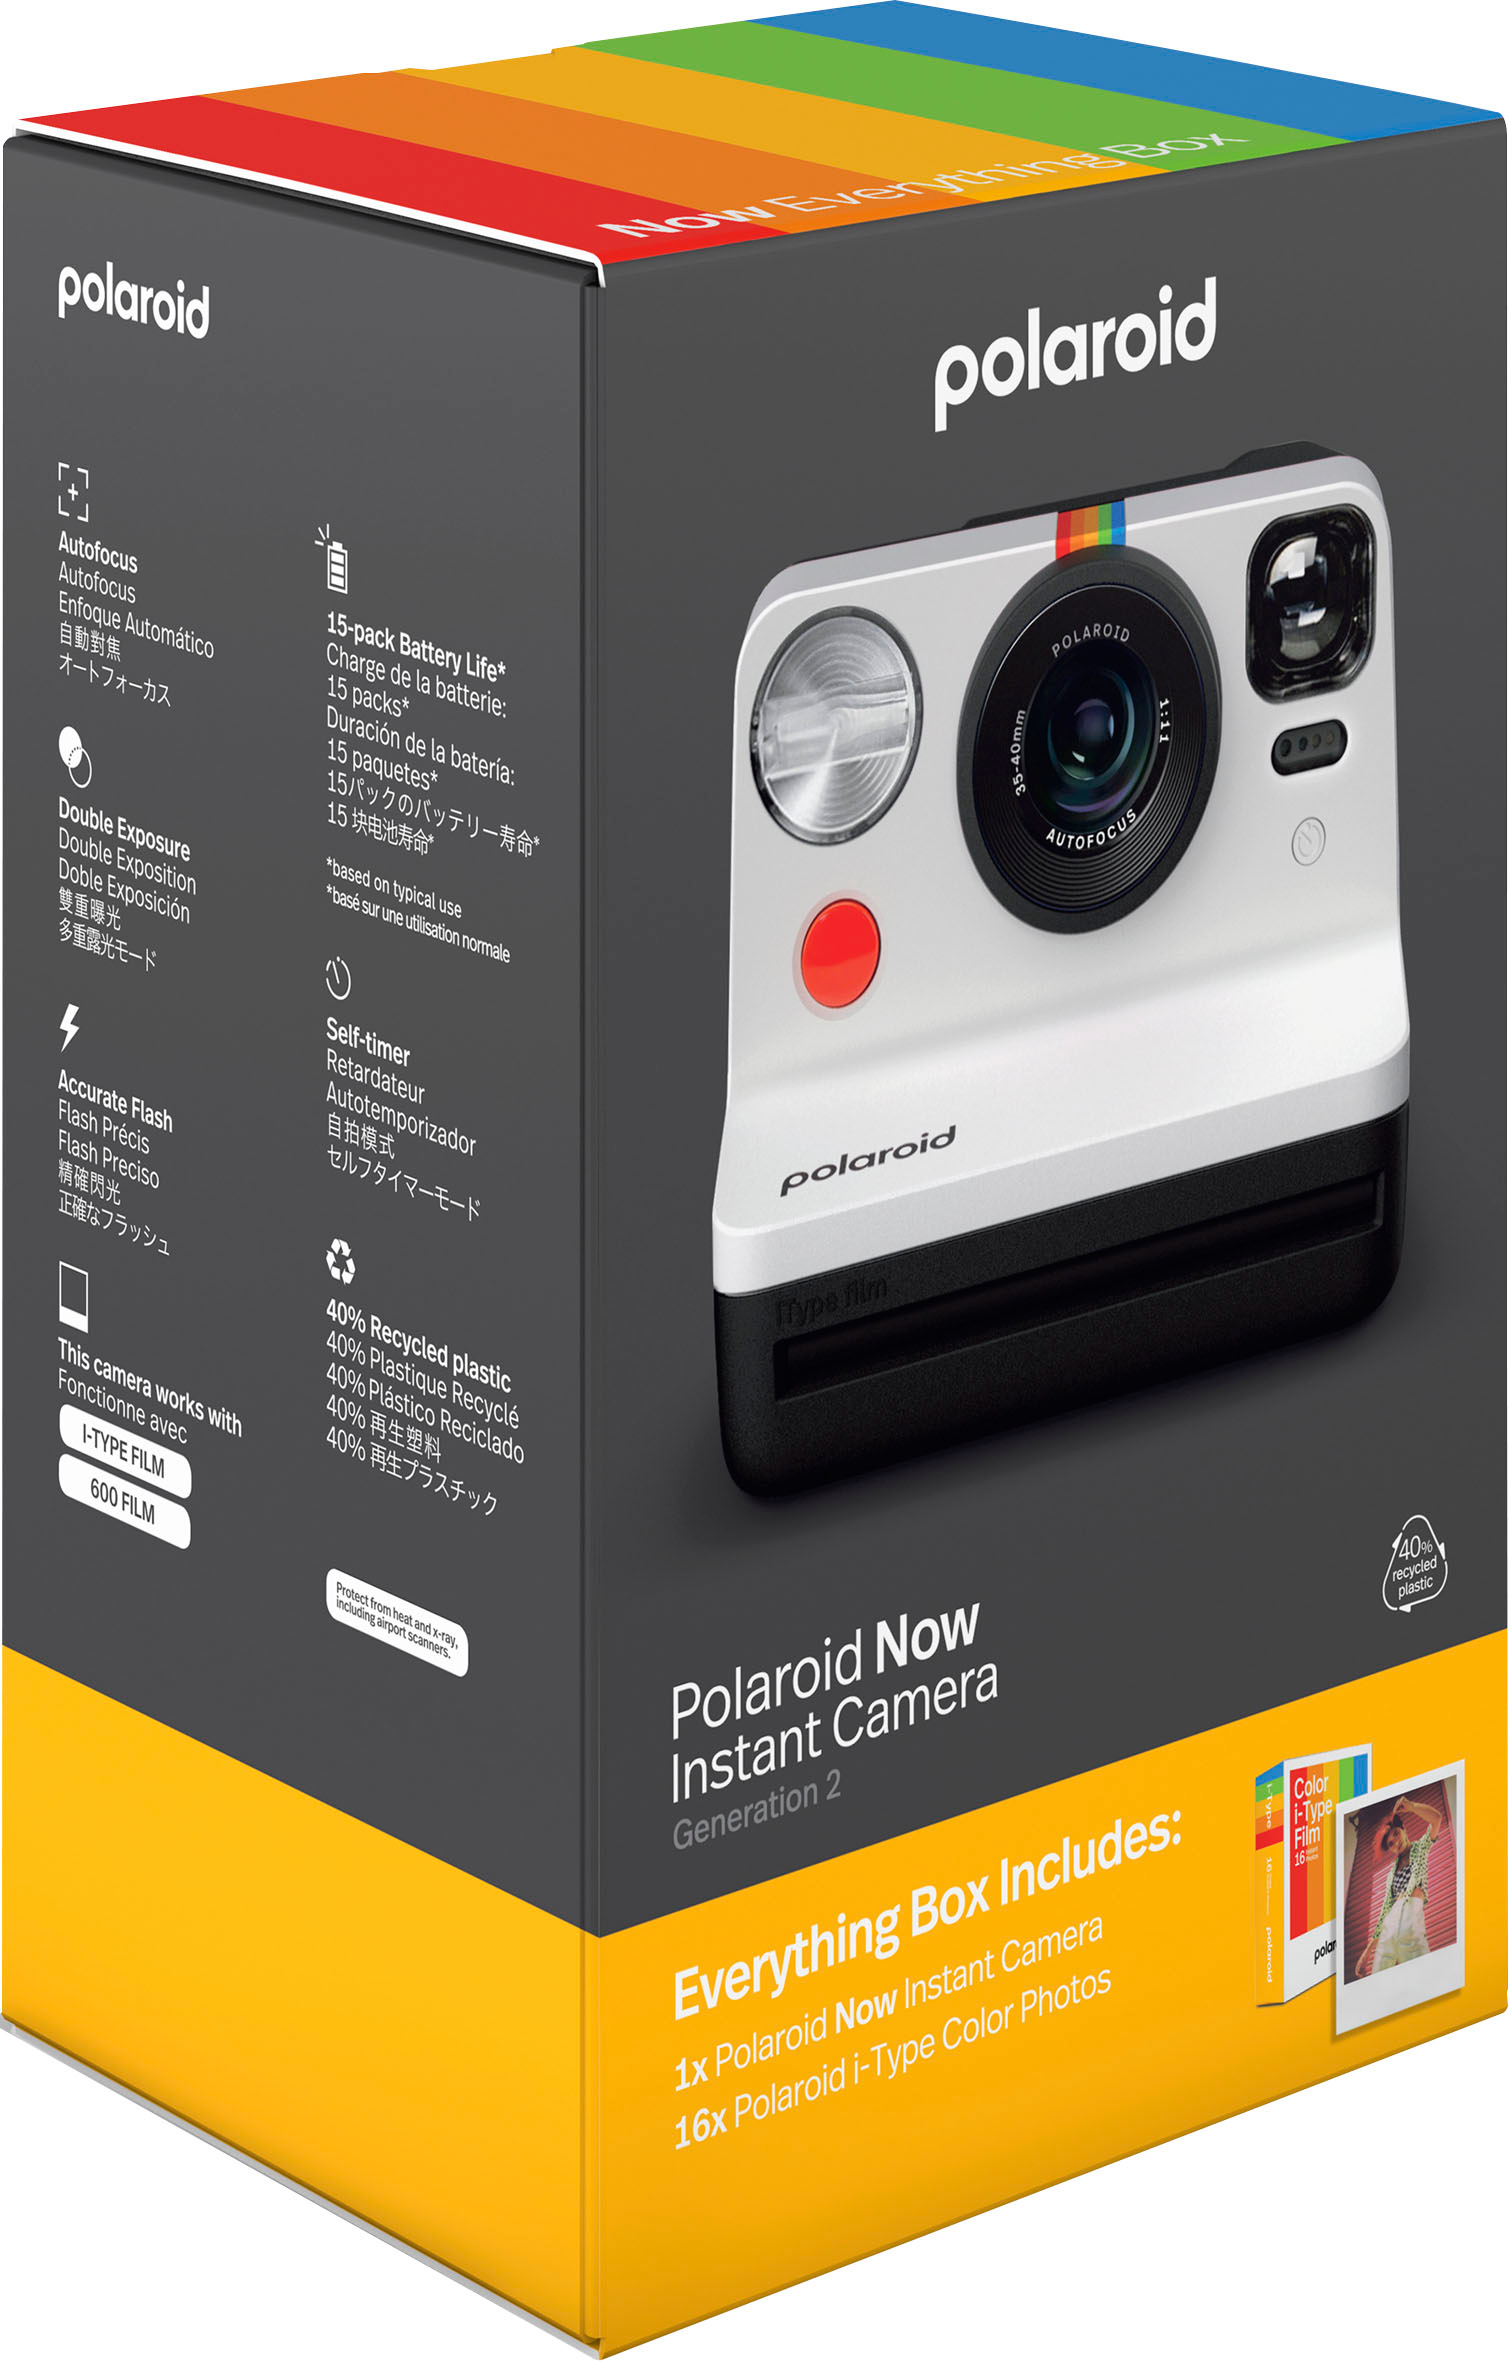 Polaroid Go Gen 2 Everything Box Black 6280 - Best Buy